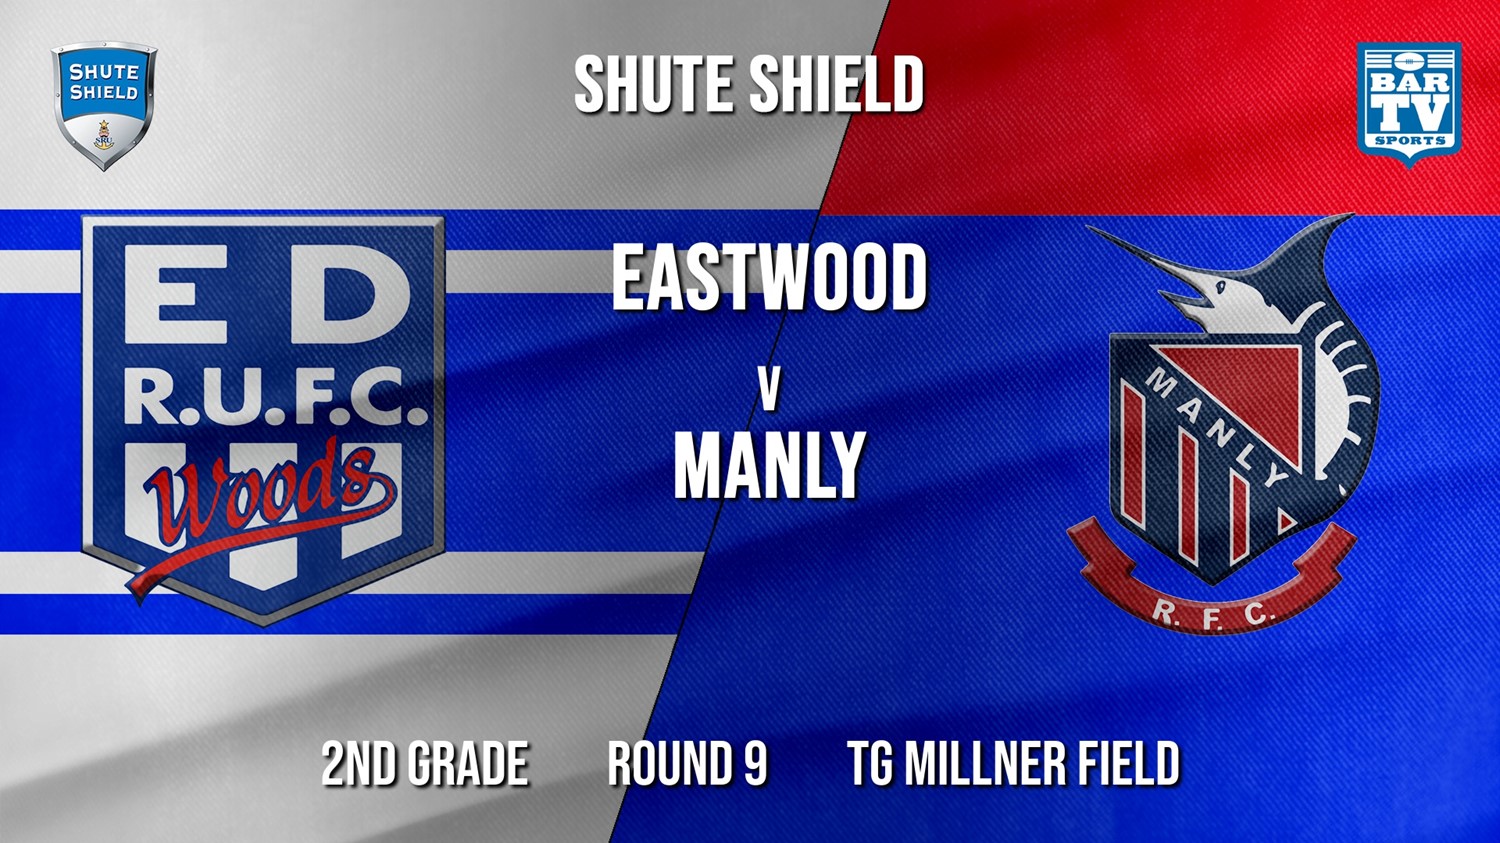 Shute Shield Round 9 - 2nd Grade - Eastwood v Manly Minigame Slate Image